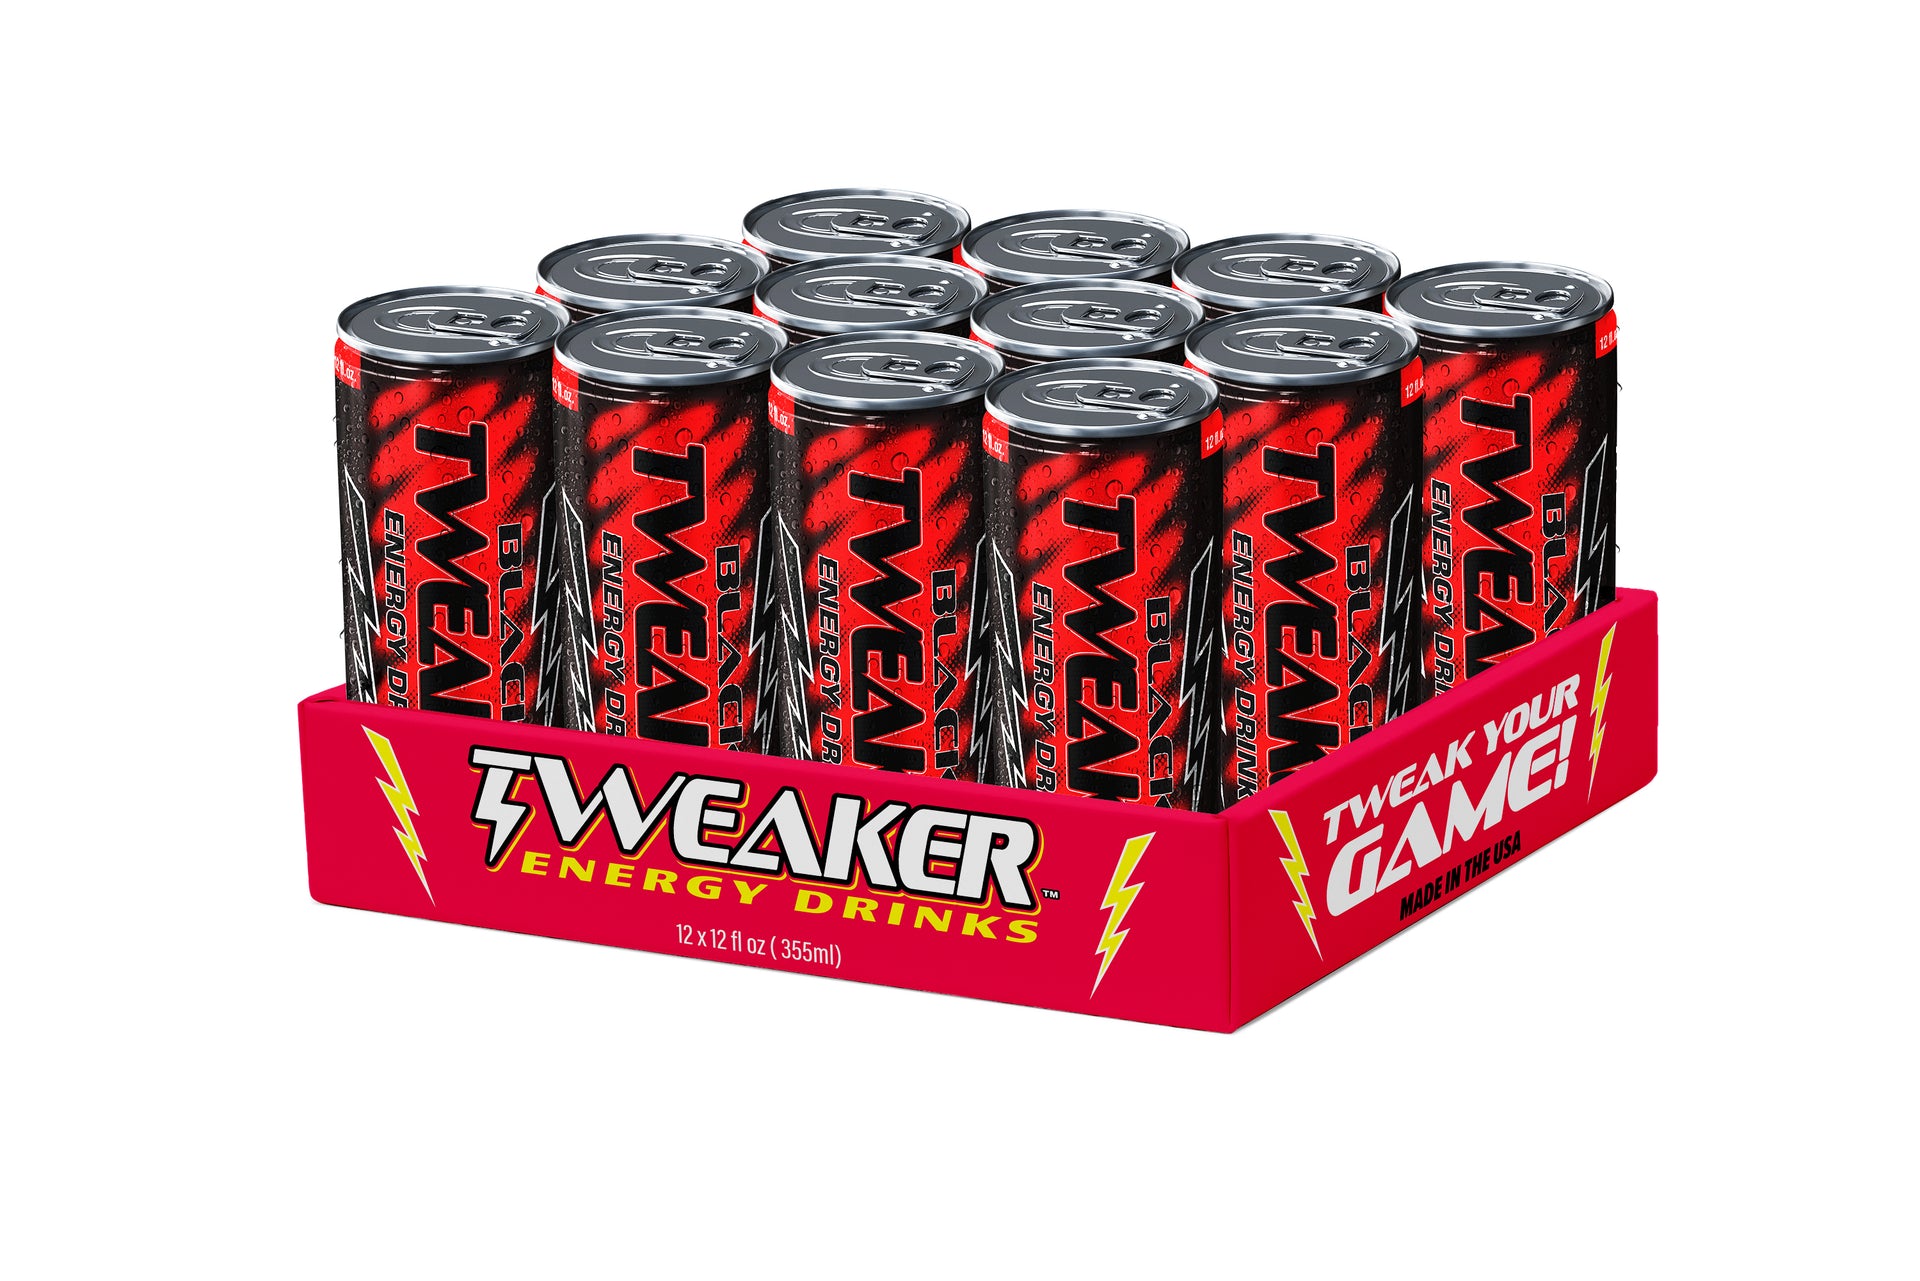 Image shows 12 pack case of Tweaker Energy Drink, Black flavor